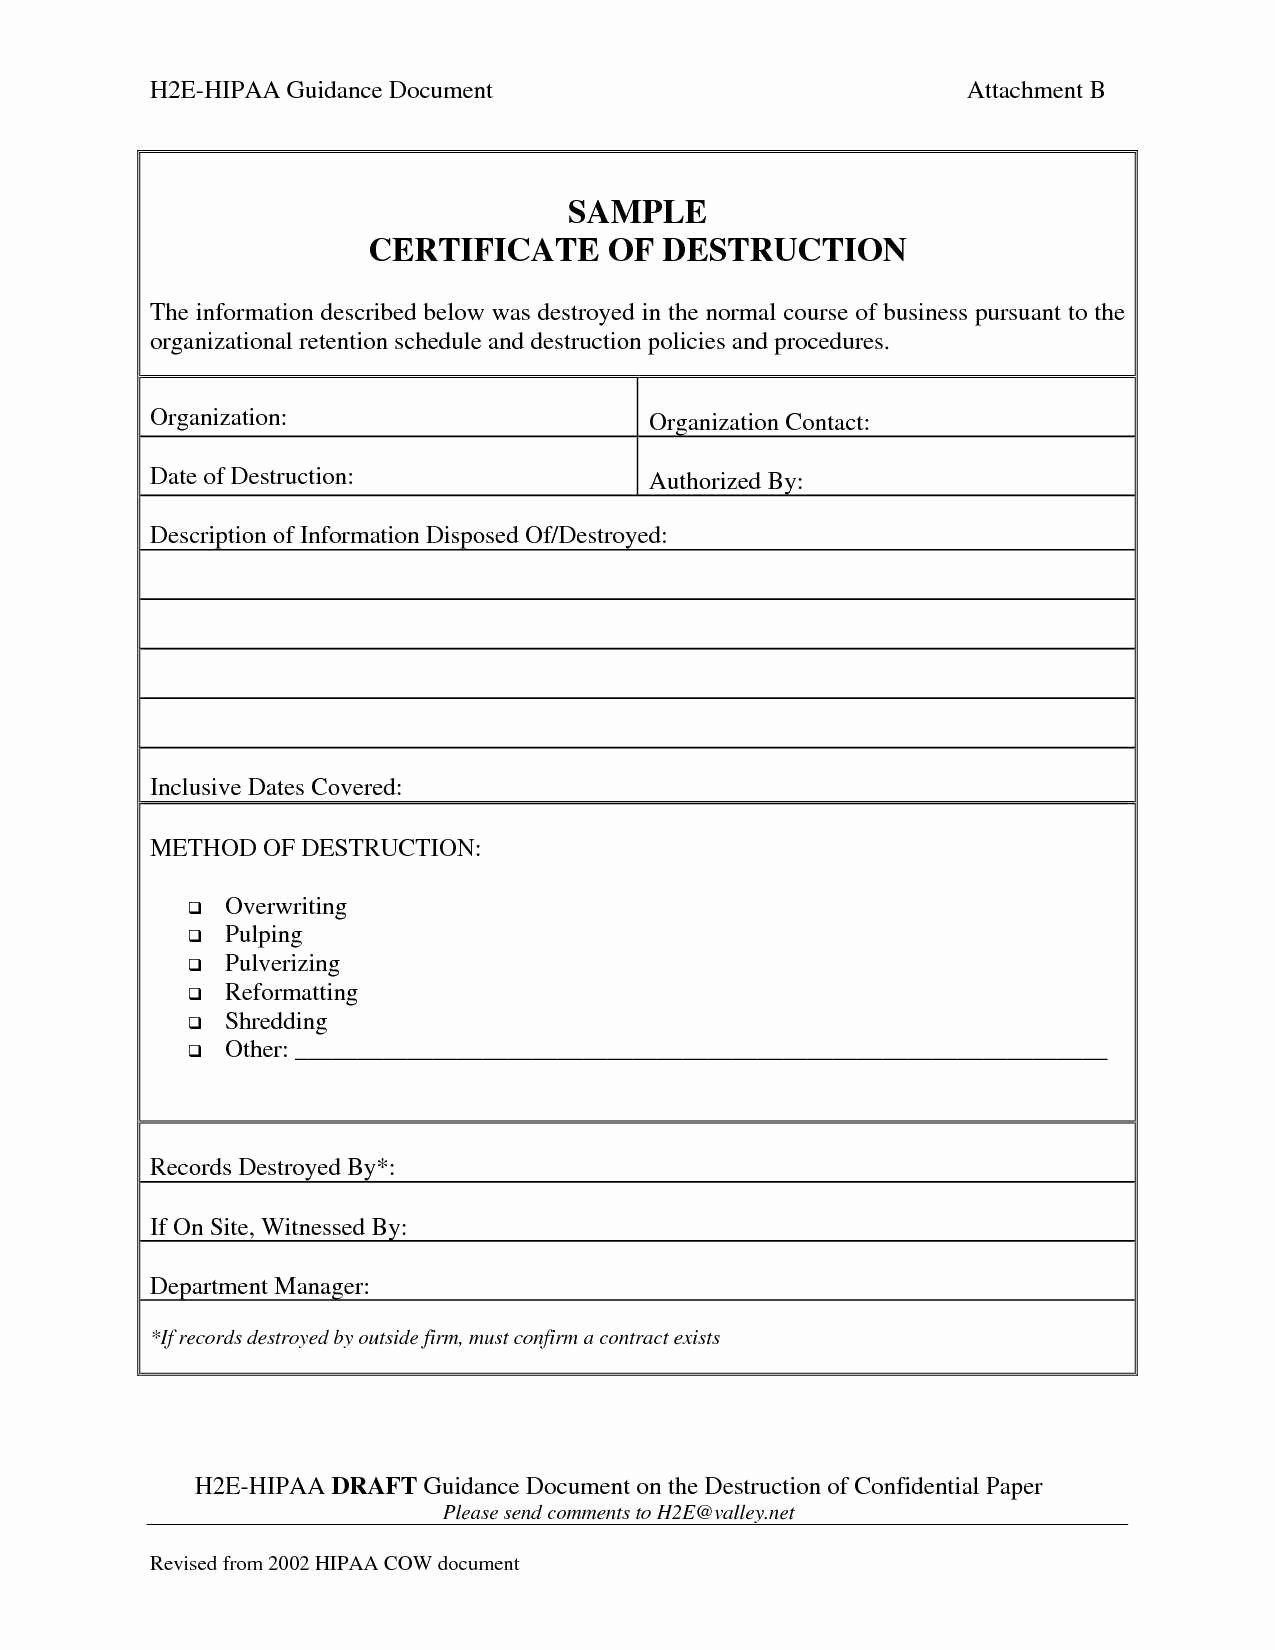 Certificate Of Data Destruction Template Luxury Certificate Destruction Template Word Reeviewer